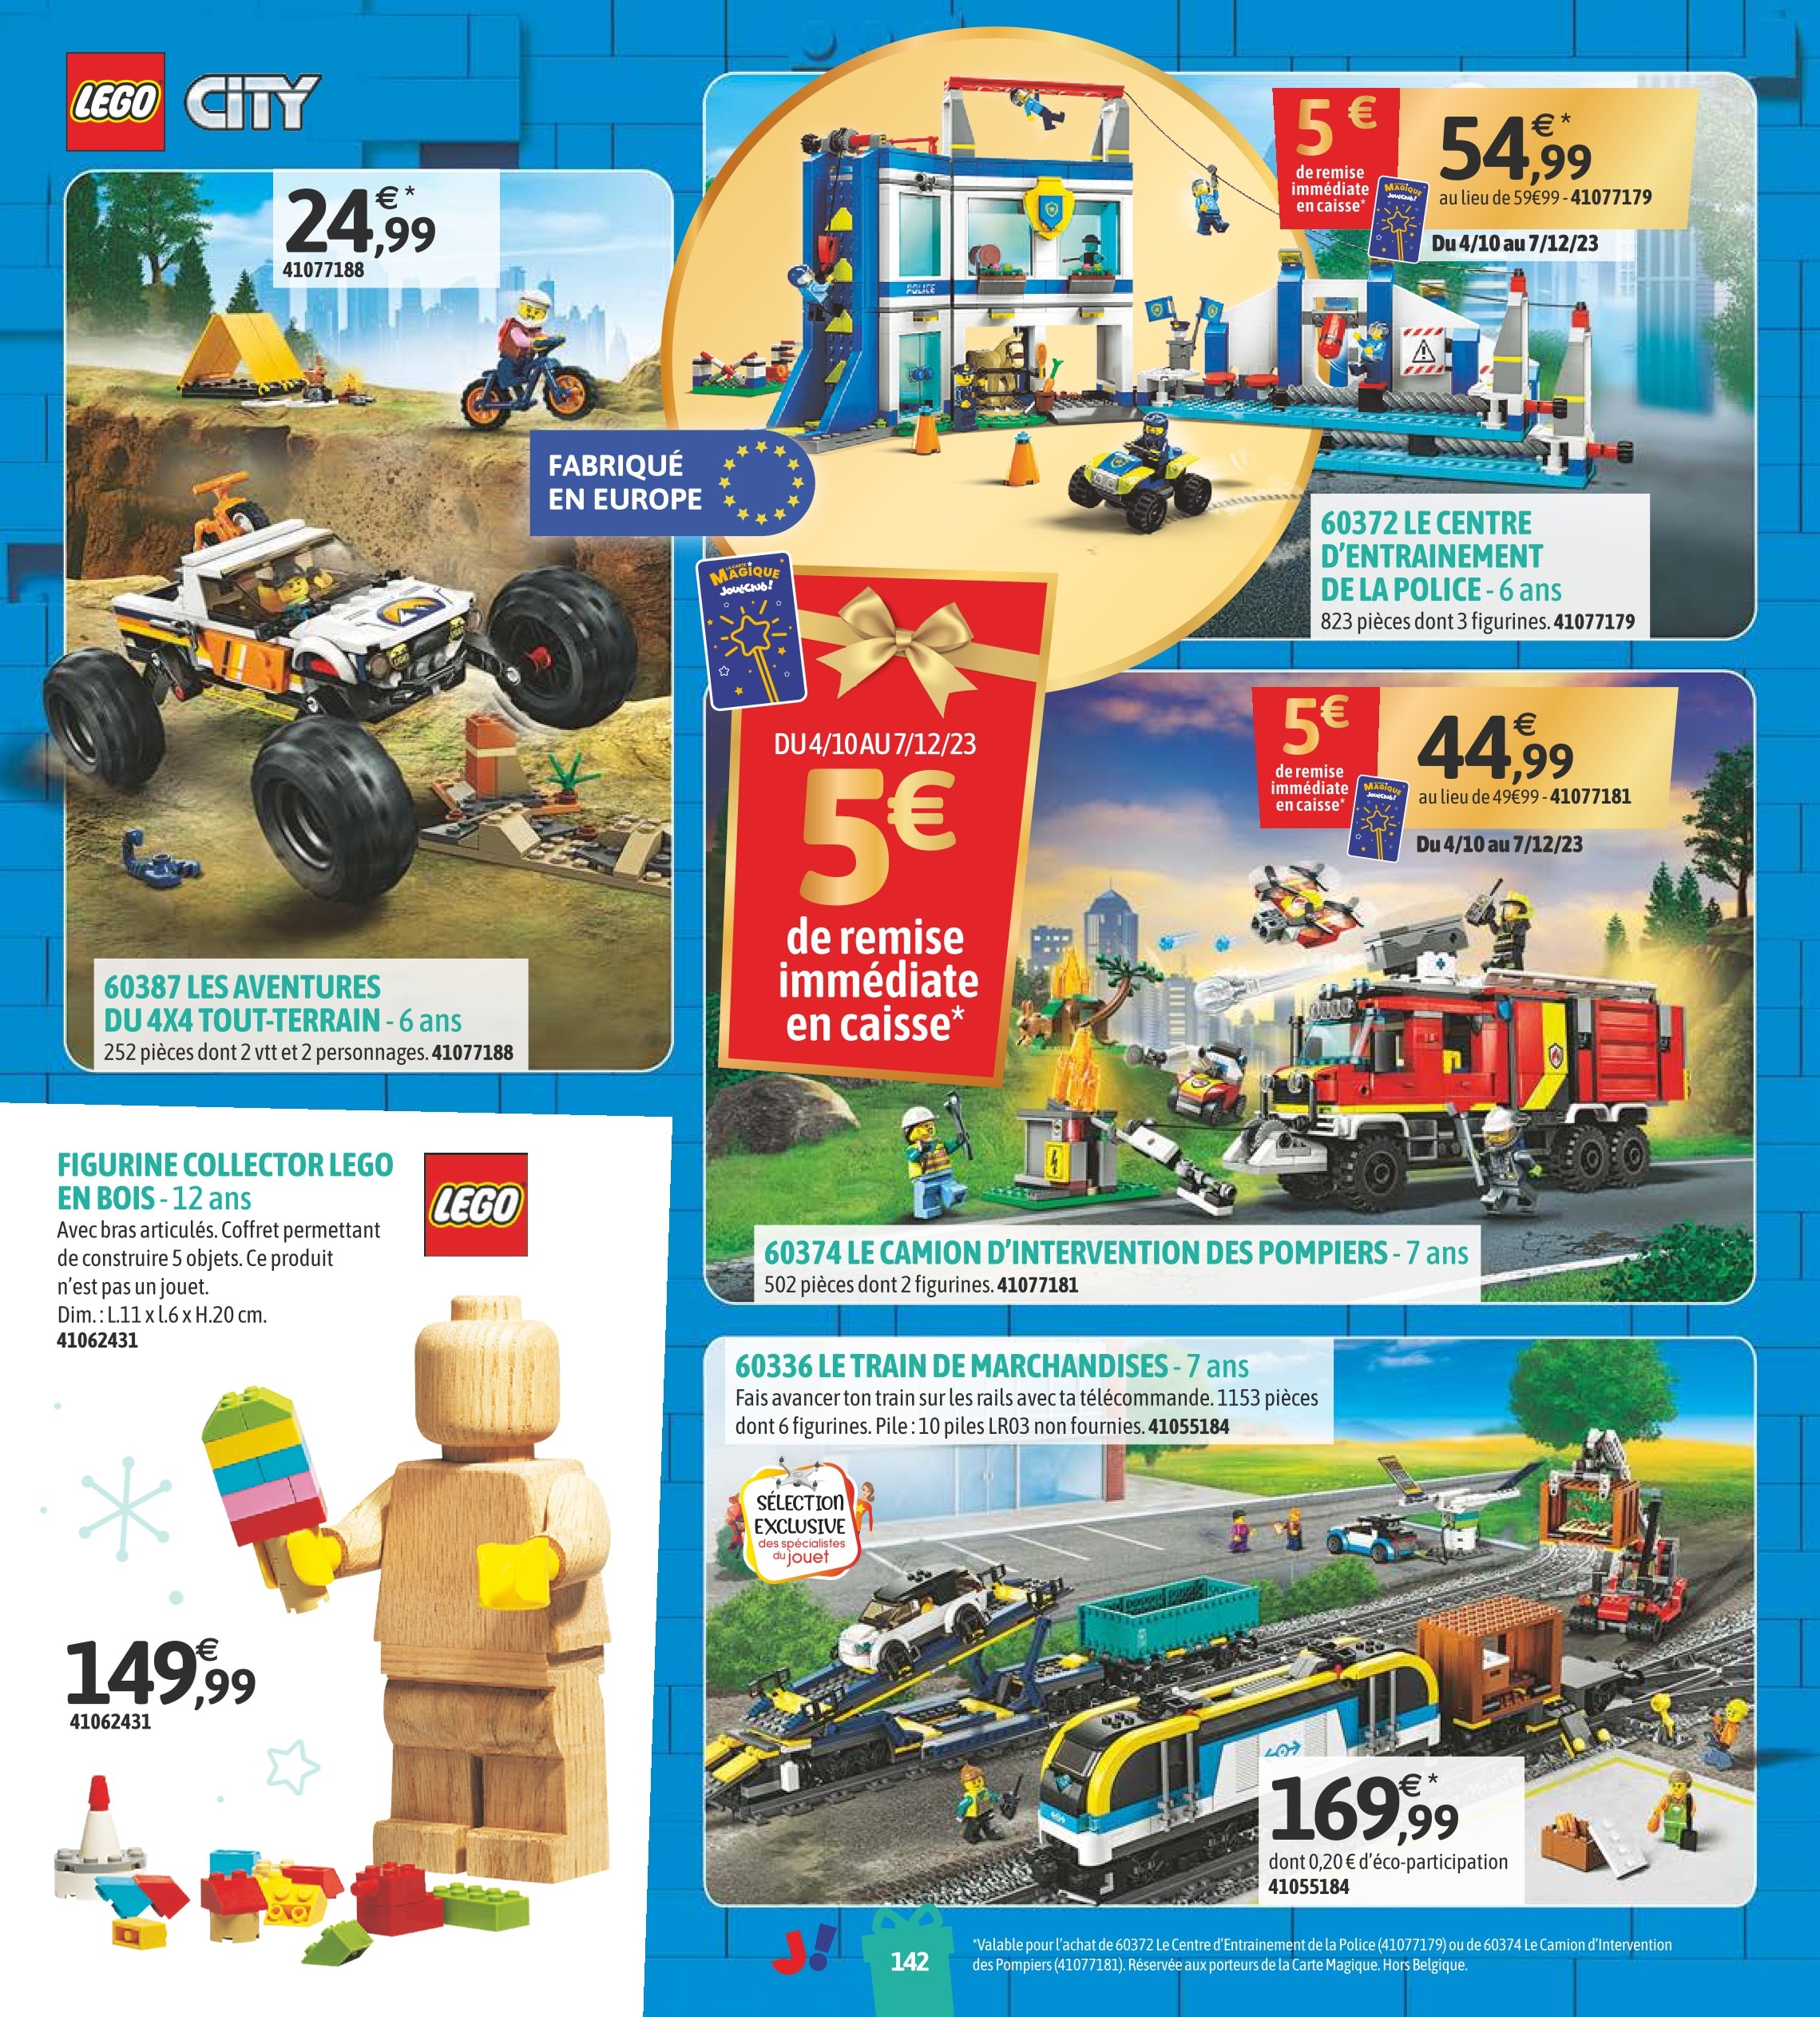 Promo Lego City à Tourcoing ᐅ Achat Lego City pas cher à Tourcoing